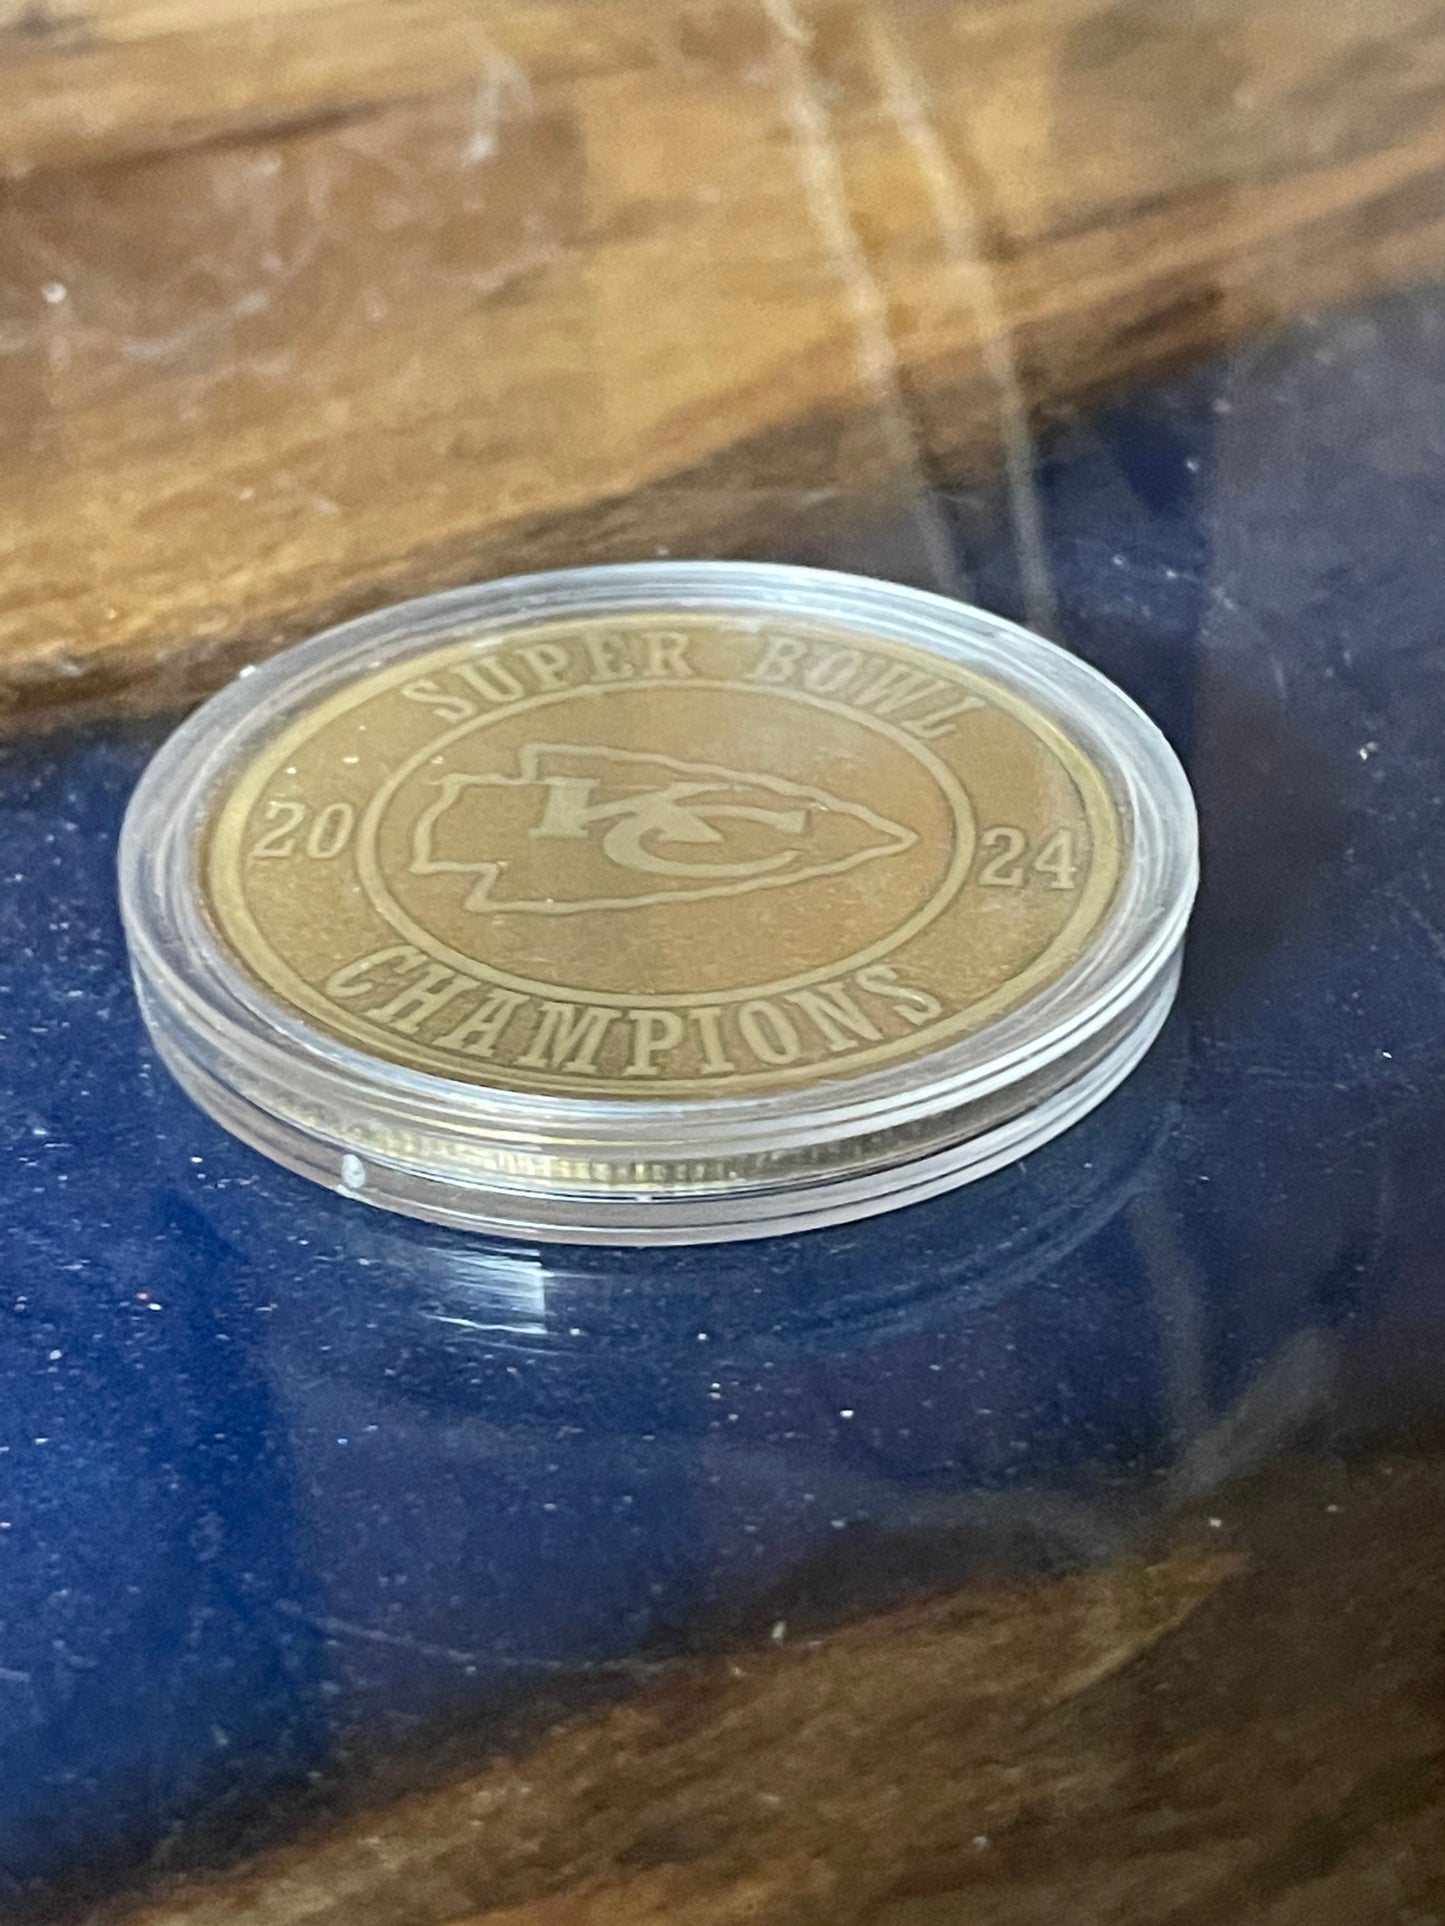 Chiefs Super Bowl Champions Commemorative Brass coin